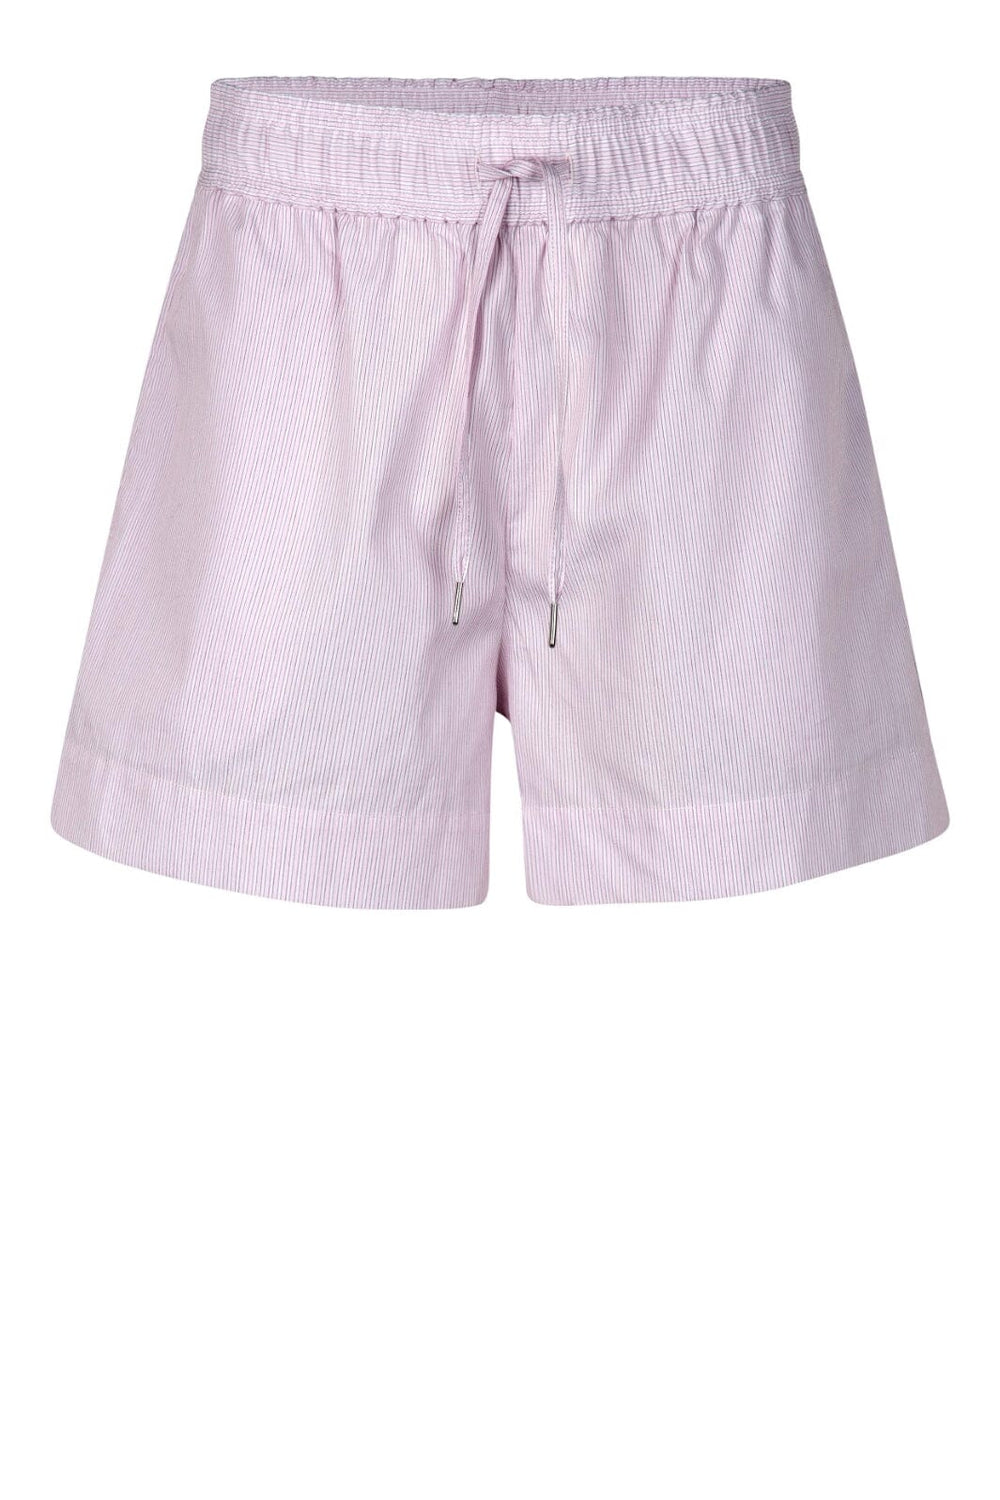 Second Female - Yaya Shorts - 3128 Lavender Fog Shorts 